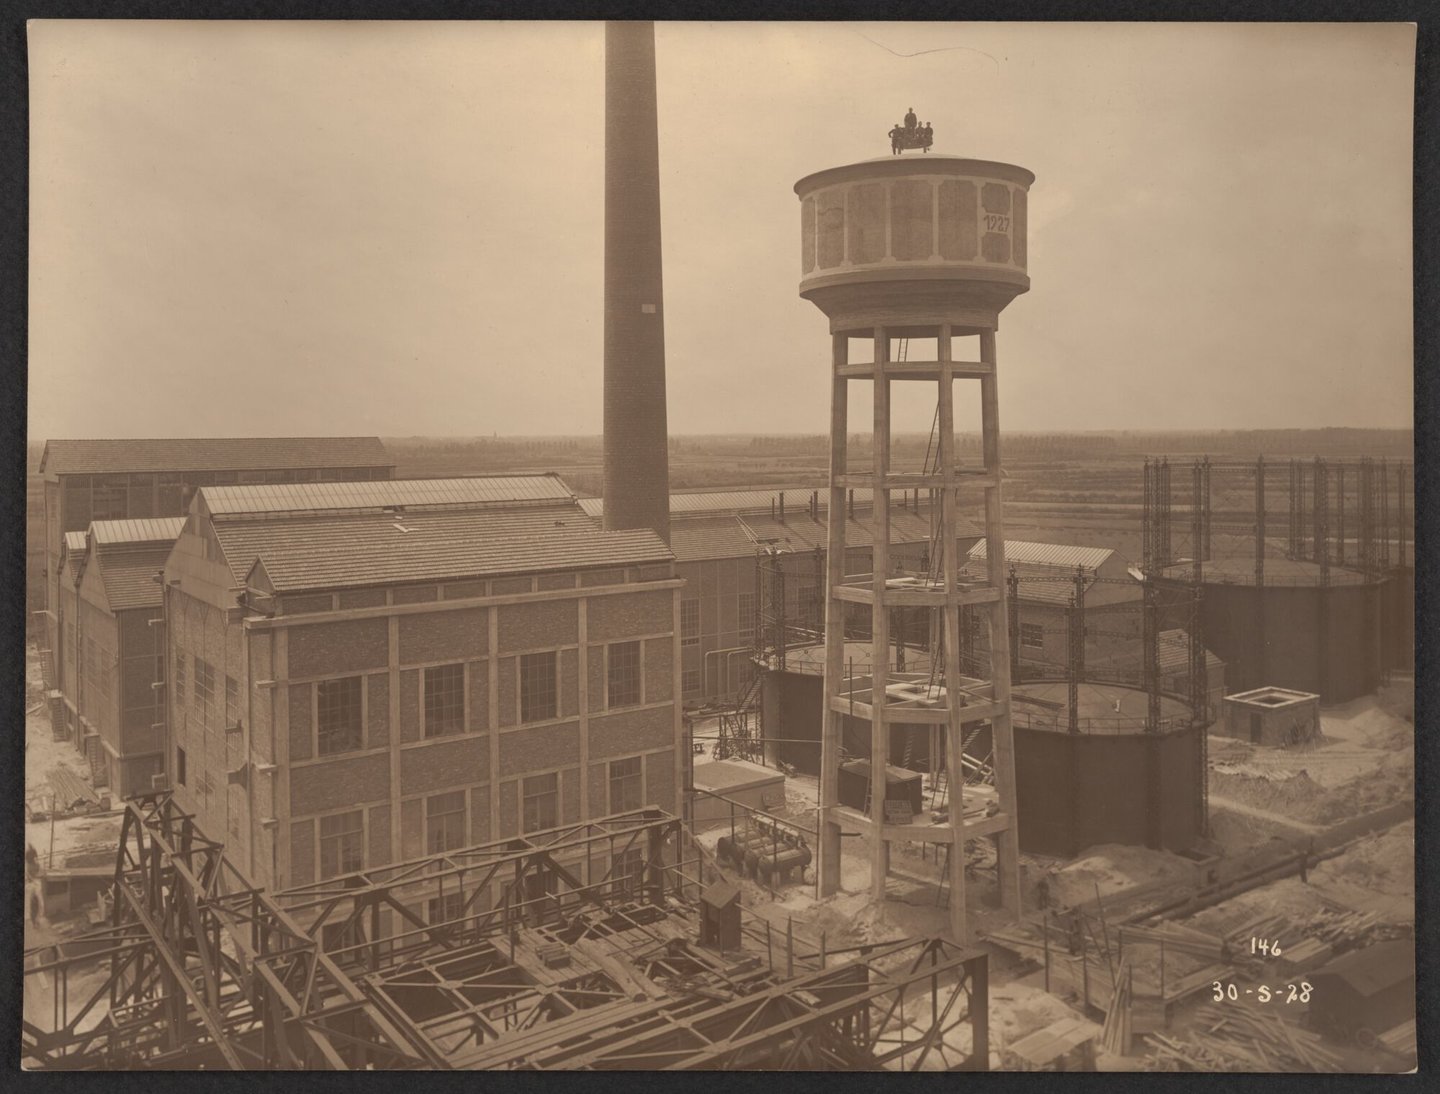 Bouw van ammoniakfabriek van cokesfabriek Kuhlmann in Zelzate